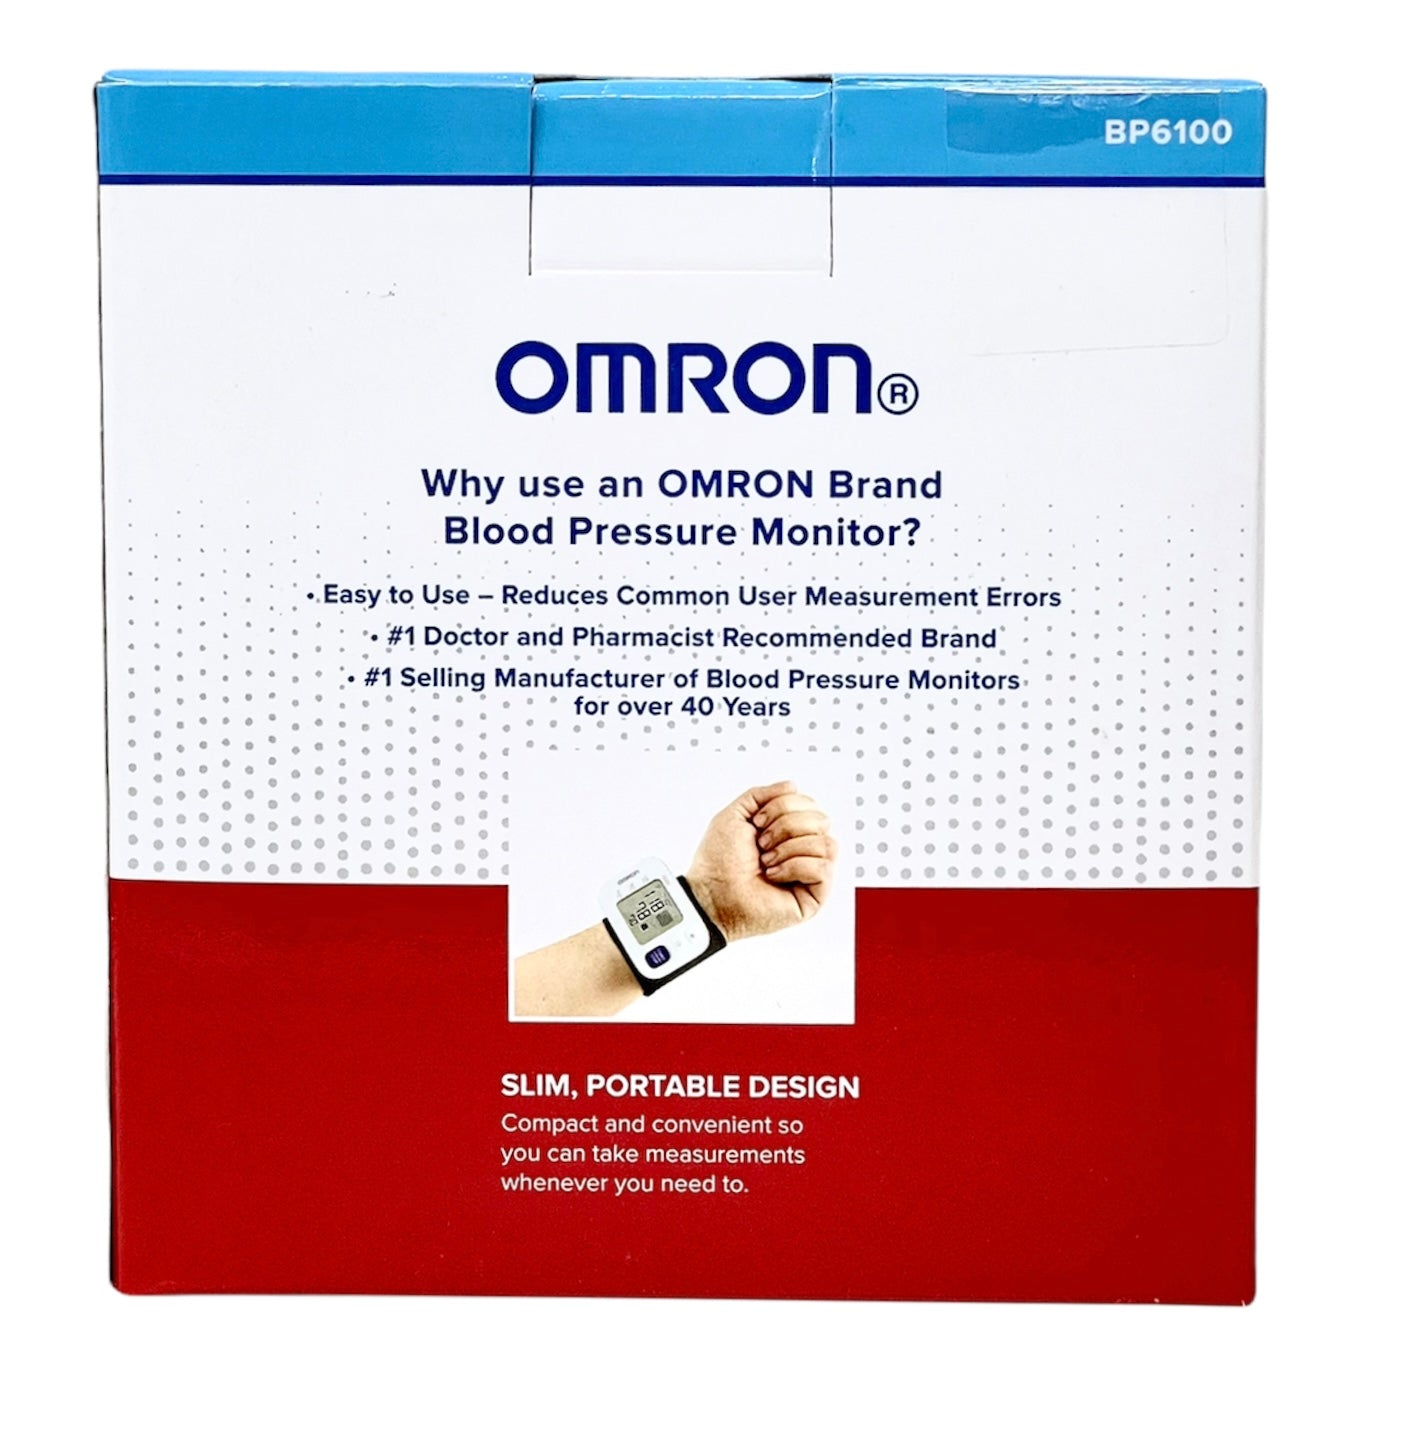 Omron Blood Pressure Monitor, 3 Series, Wrist